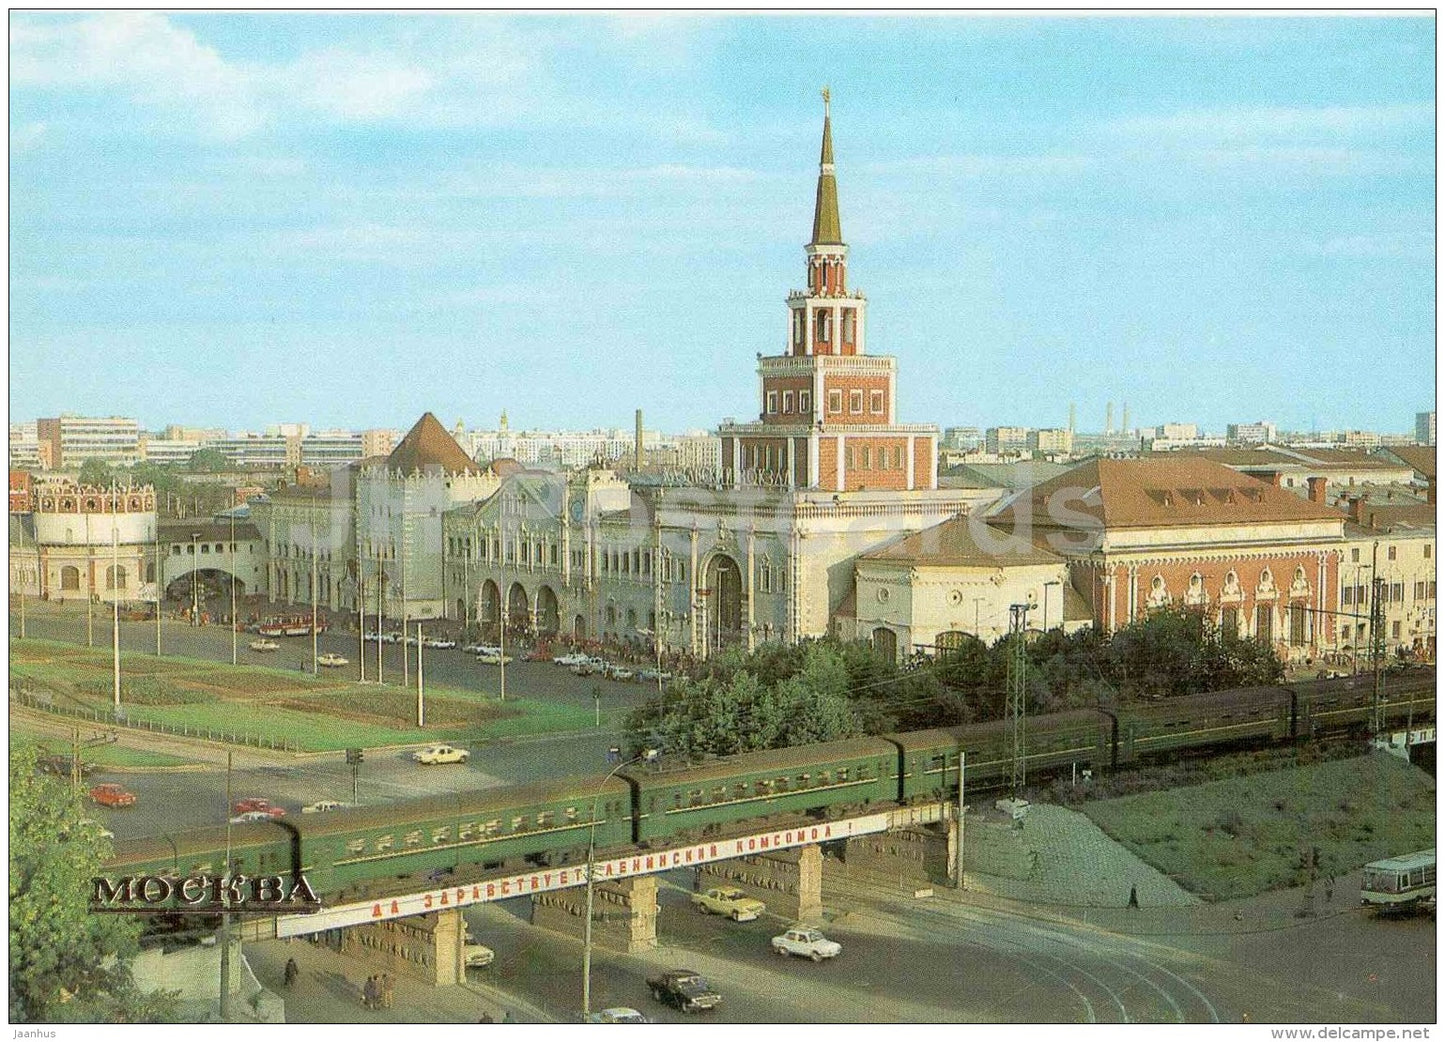 Komsomol square - Kazan Railway Station - Train - Moscow - 1983 - Russia USSR - unused - JH Postcards